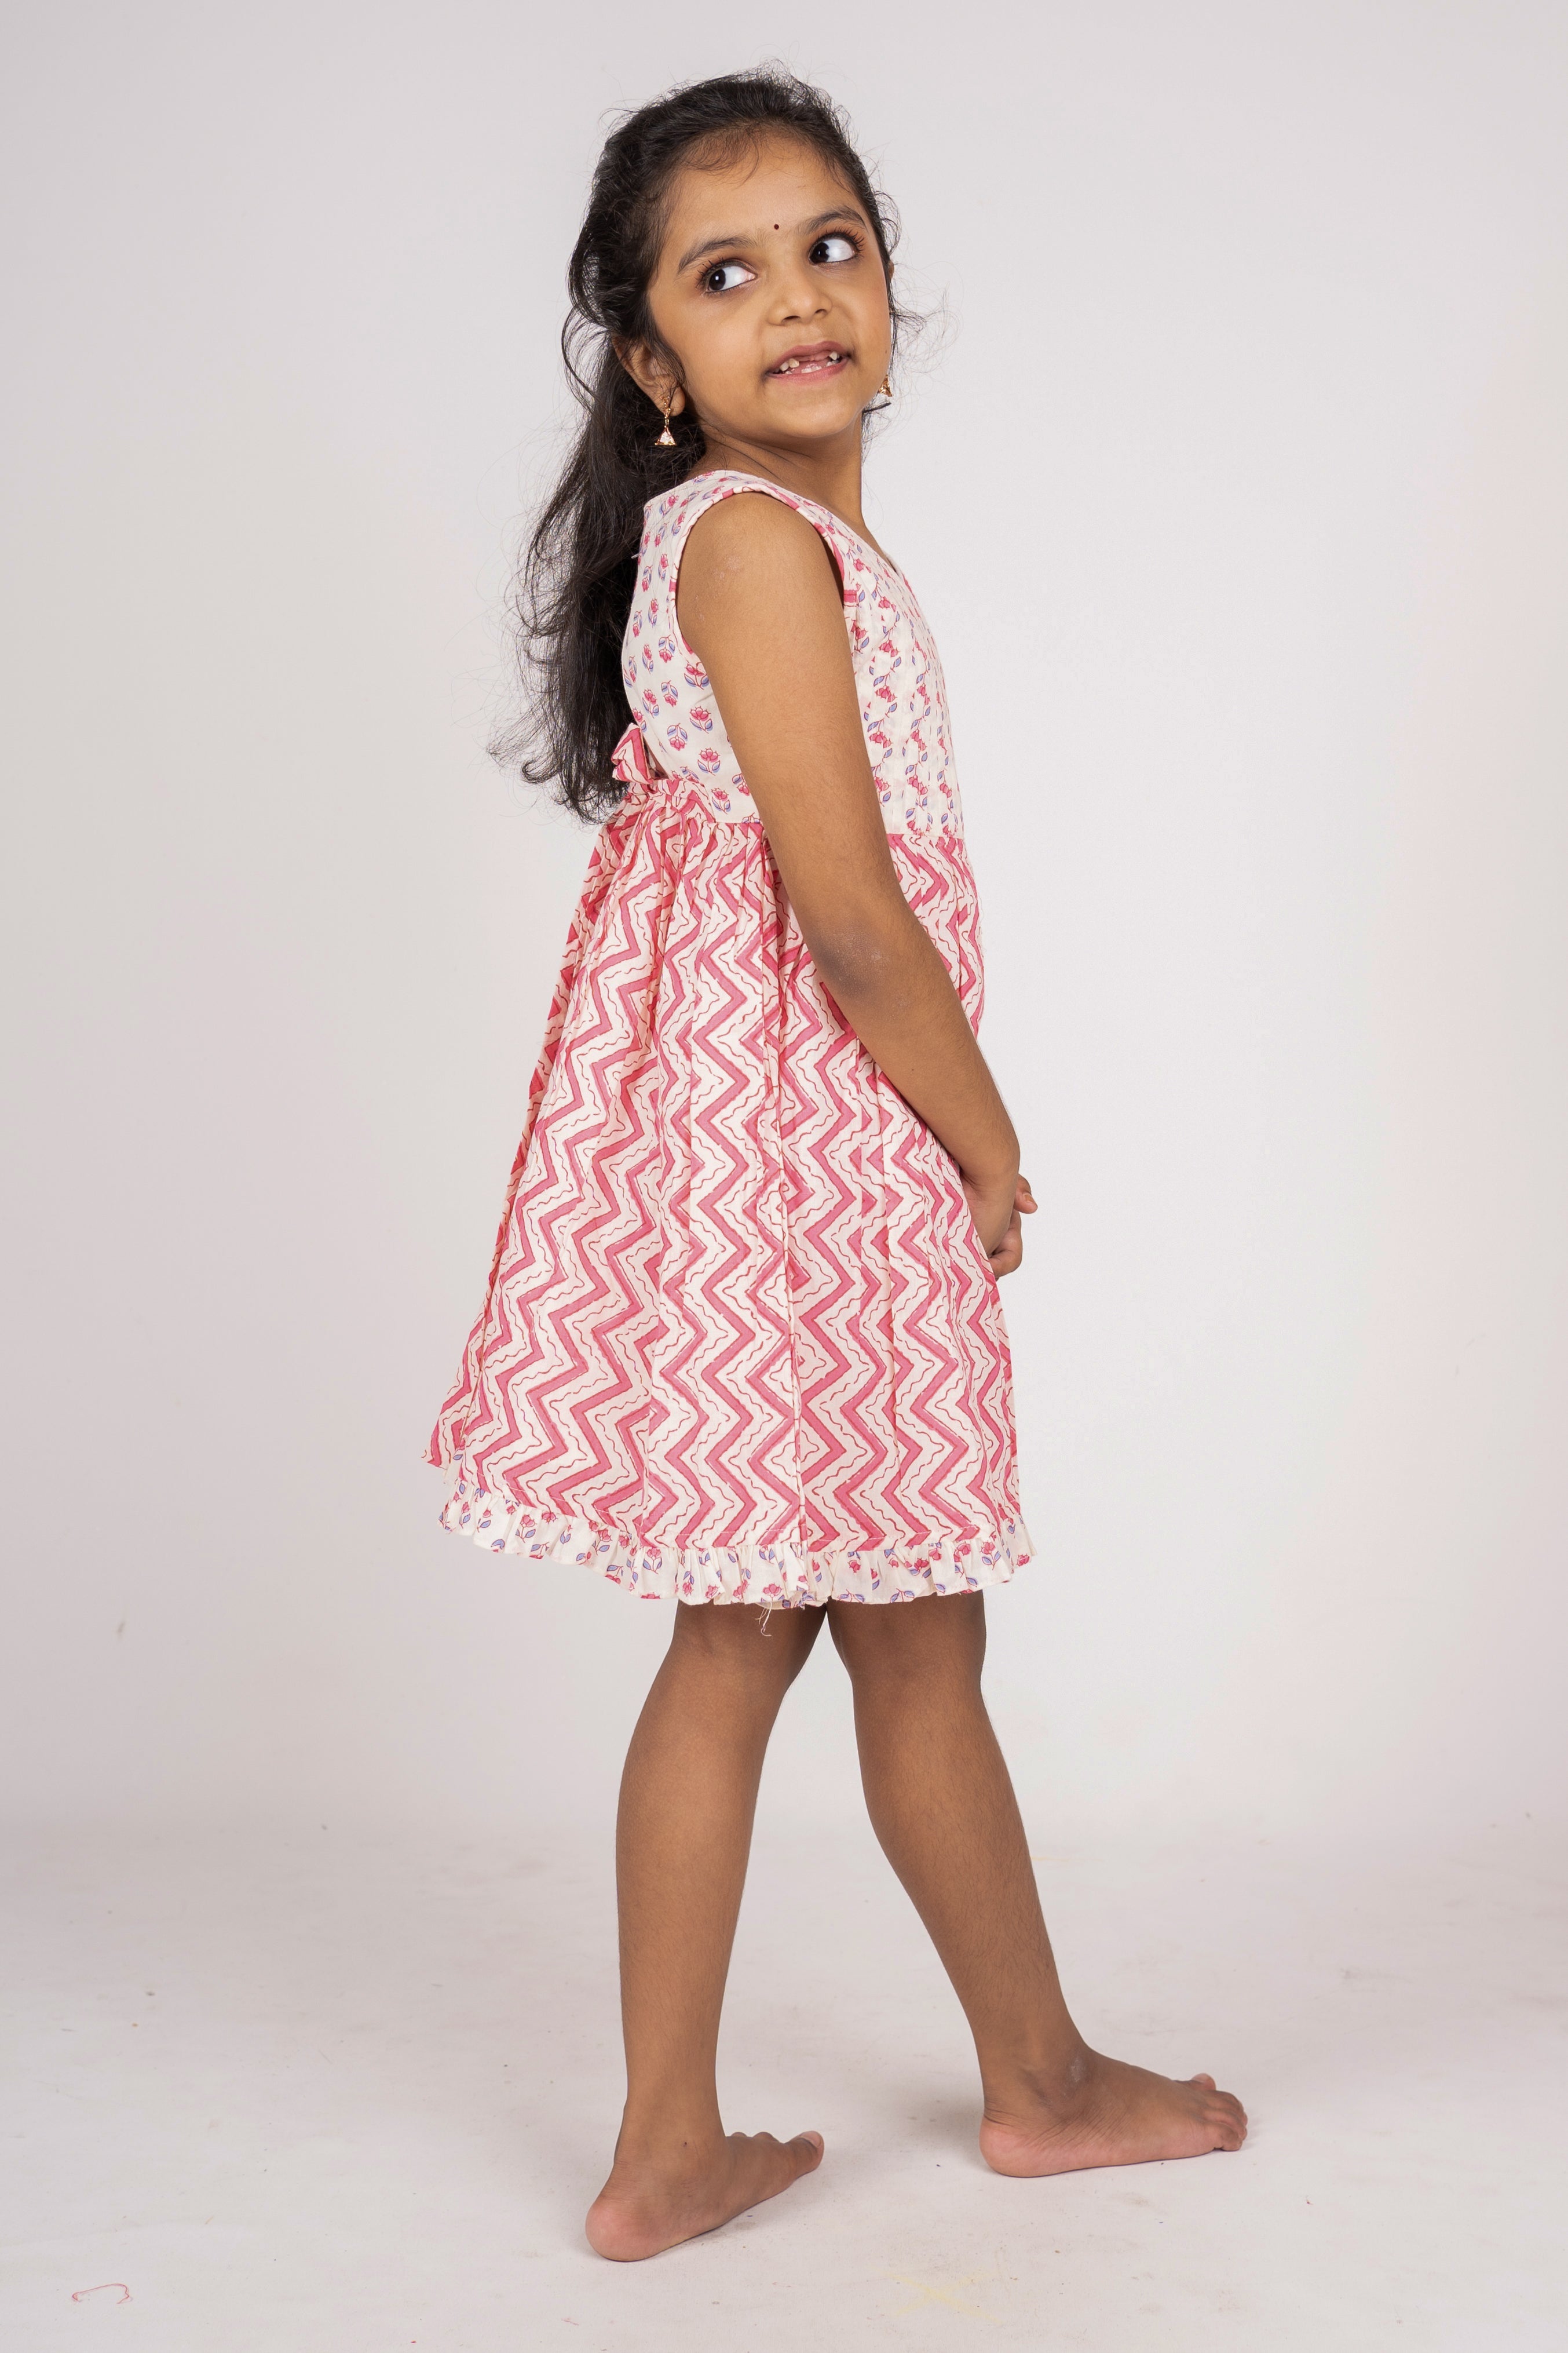 Baby Girl Dress Designs Children Frock Patterns Lace Design Girls Dresses